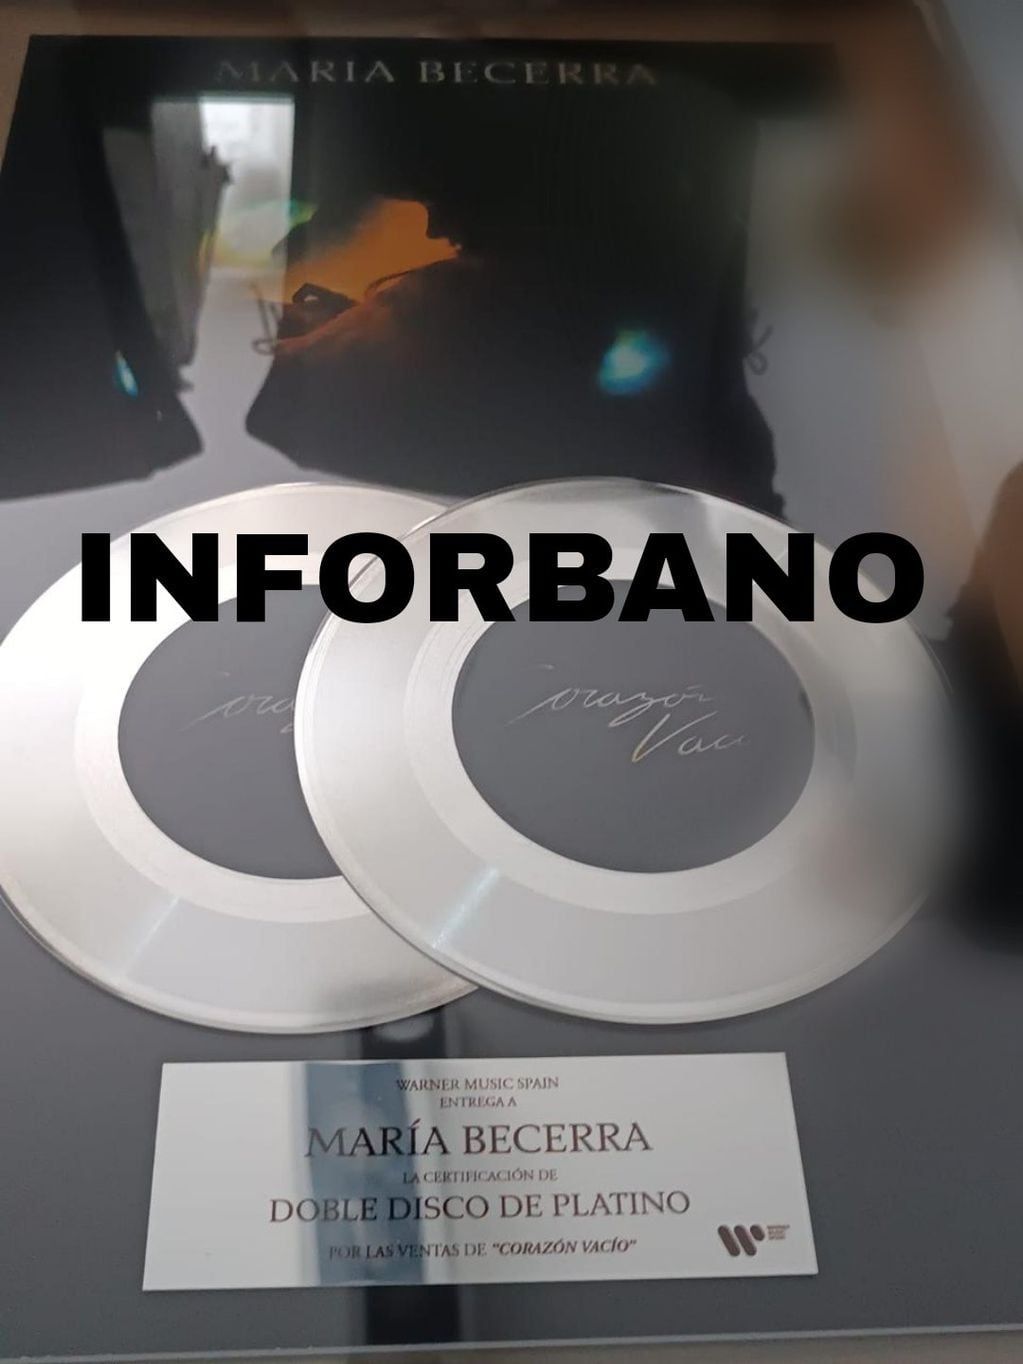 La placa de disco doble platino que le robaron a María Becerra